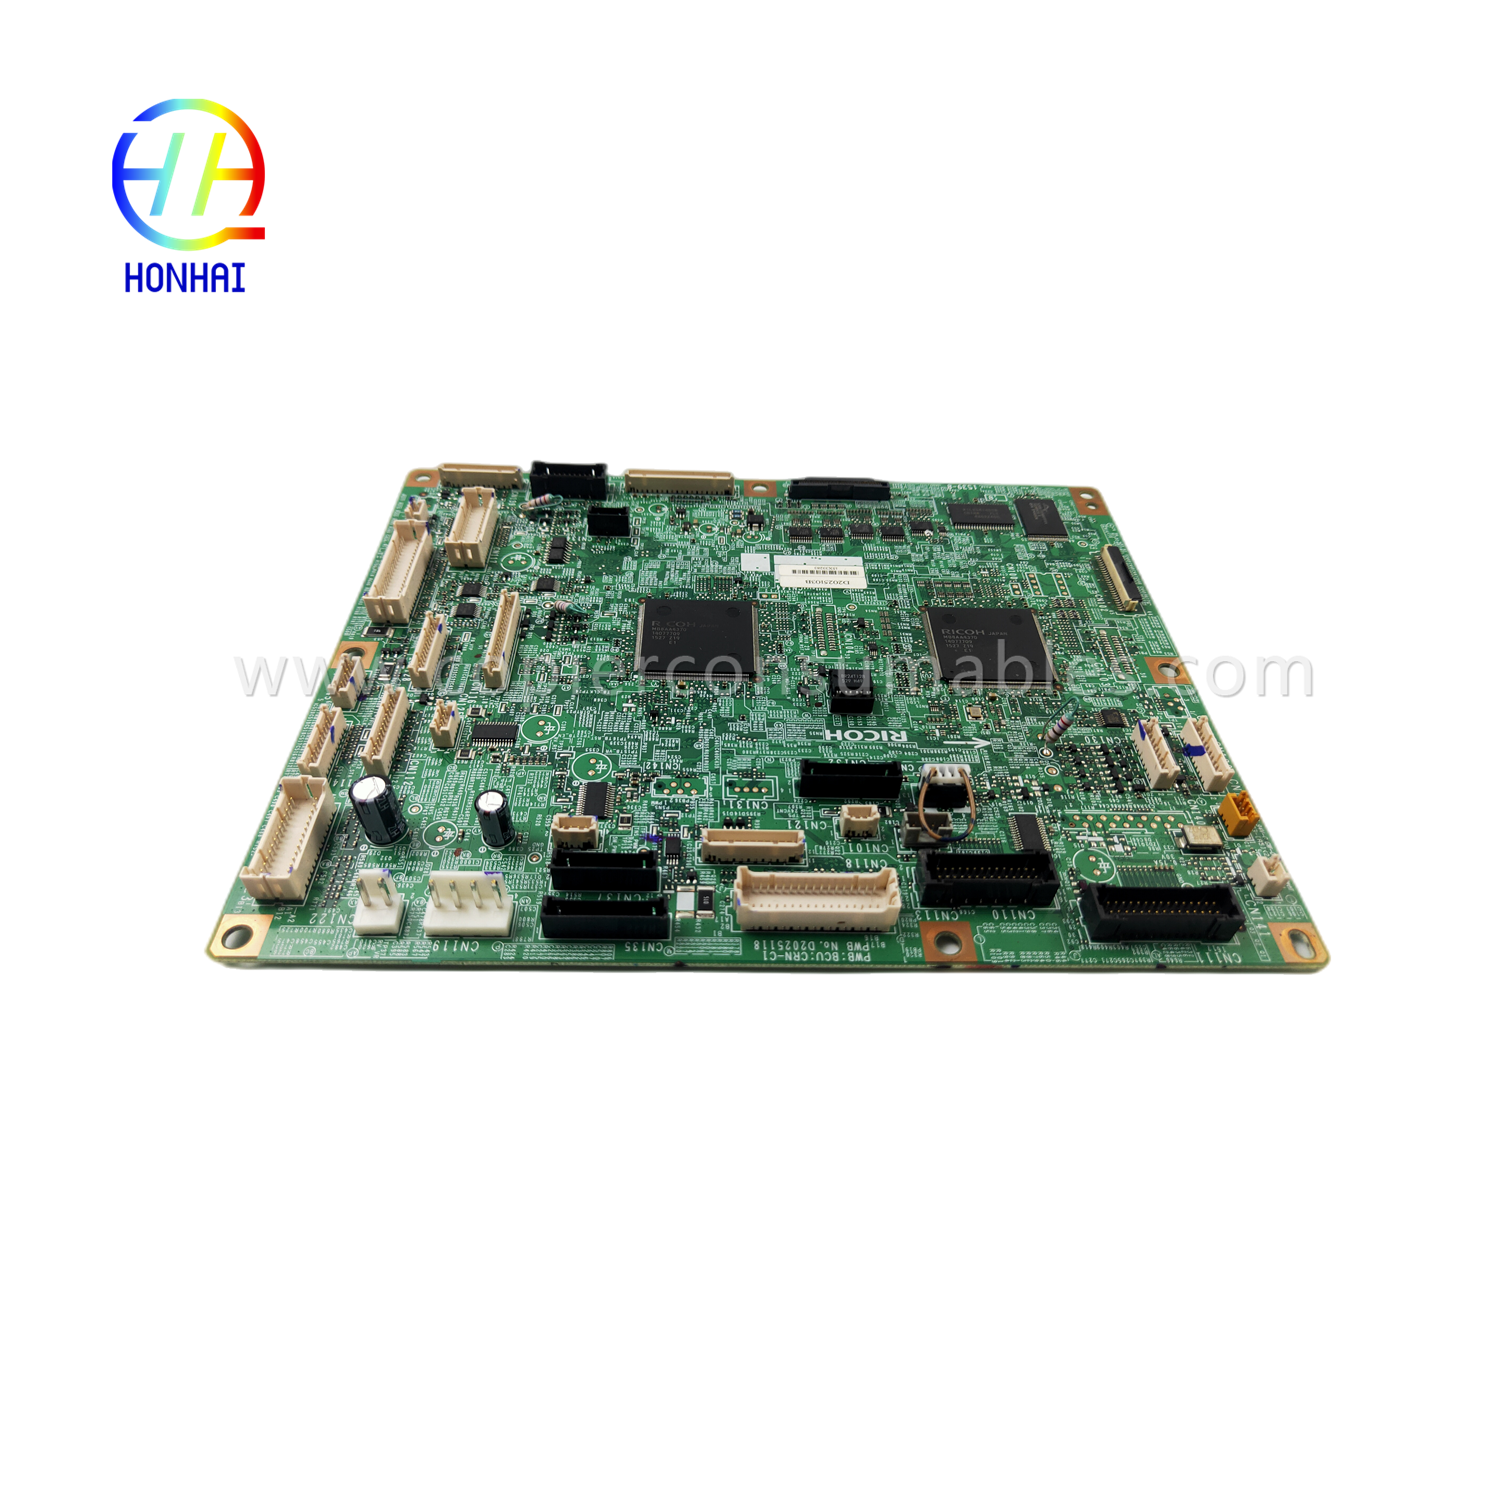 https://www.copierconsumables.com/bicu-board-for-ricoh-3045-3035-lanier-ld235-ld245-savin-4035-4045-bicu-board-assembly-product/